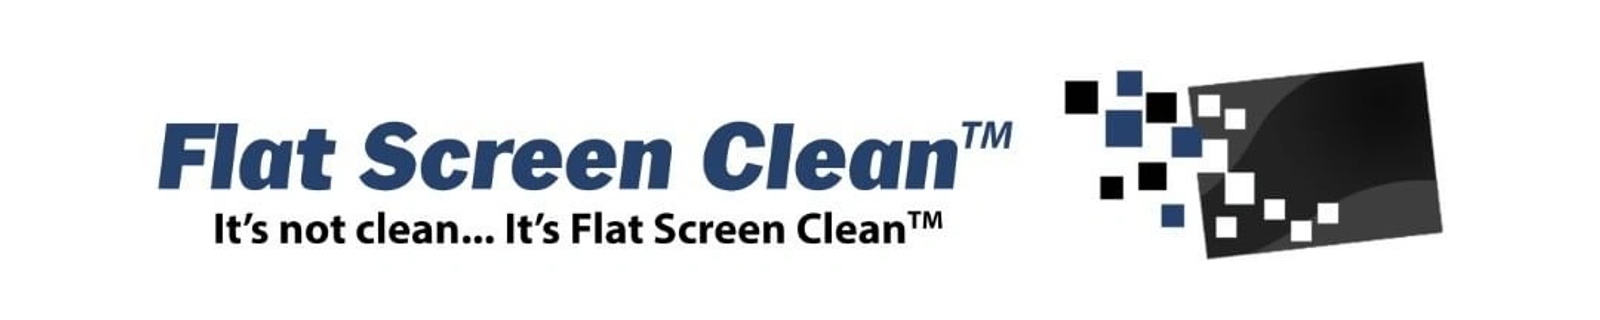 Flat Screen Clean™